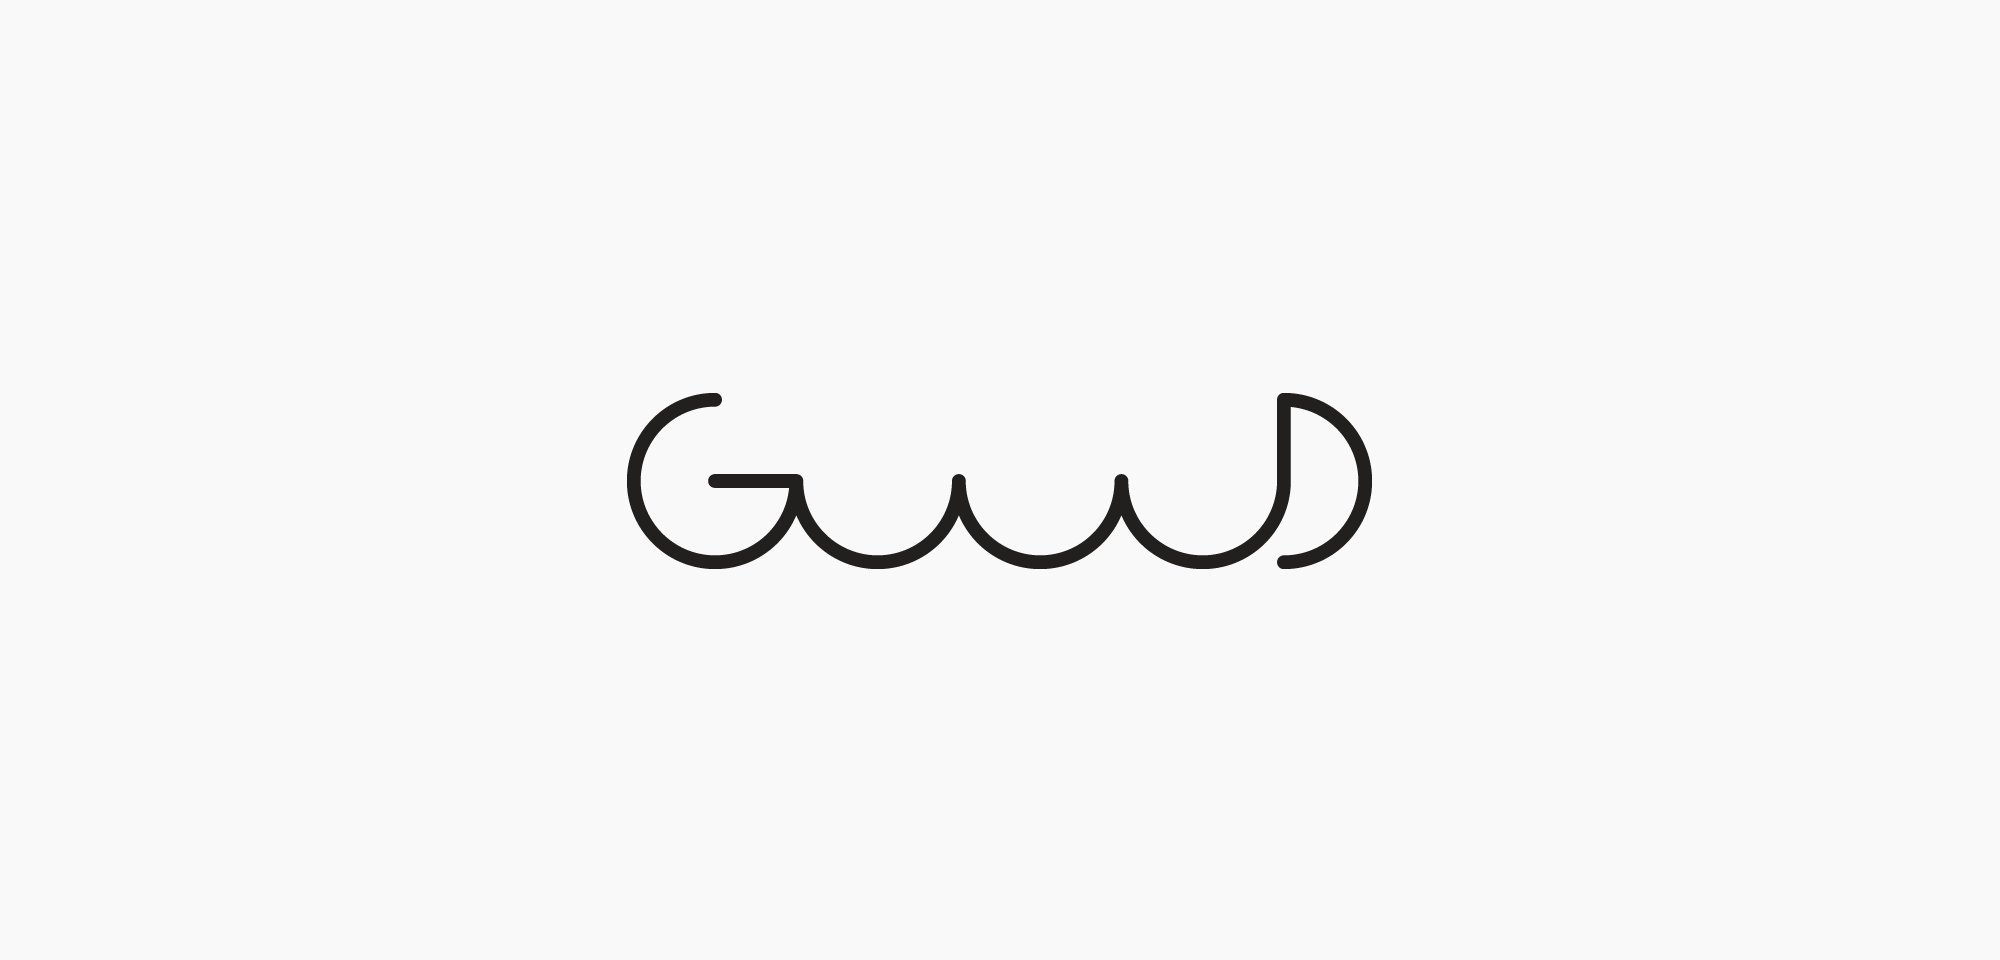 guuud_logo